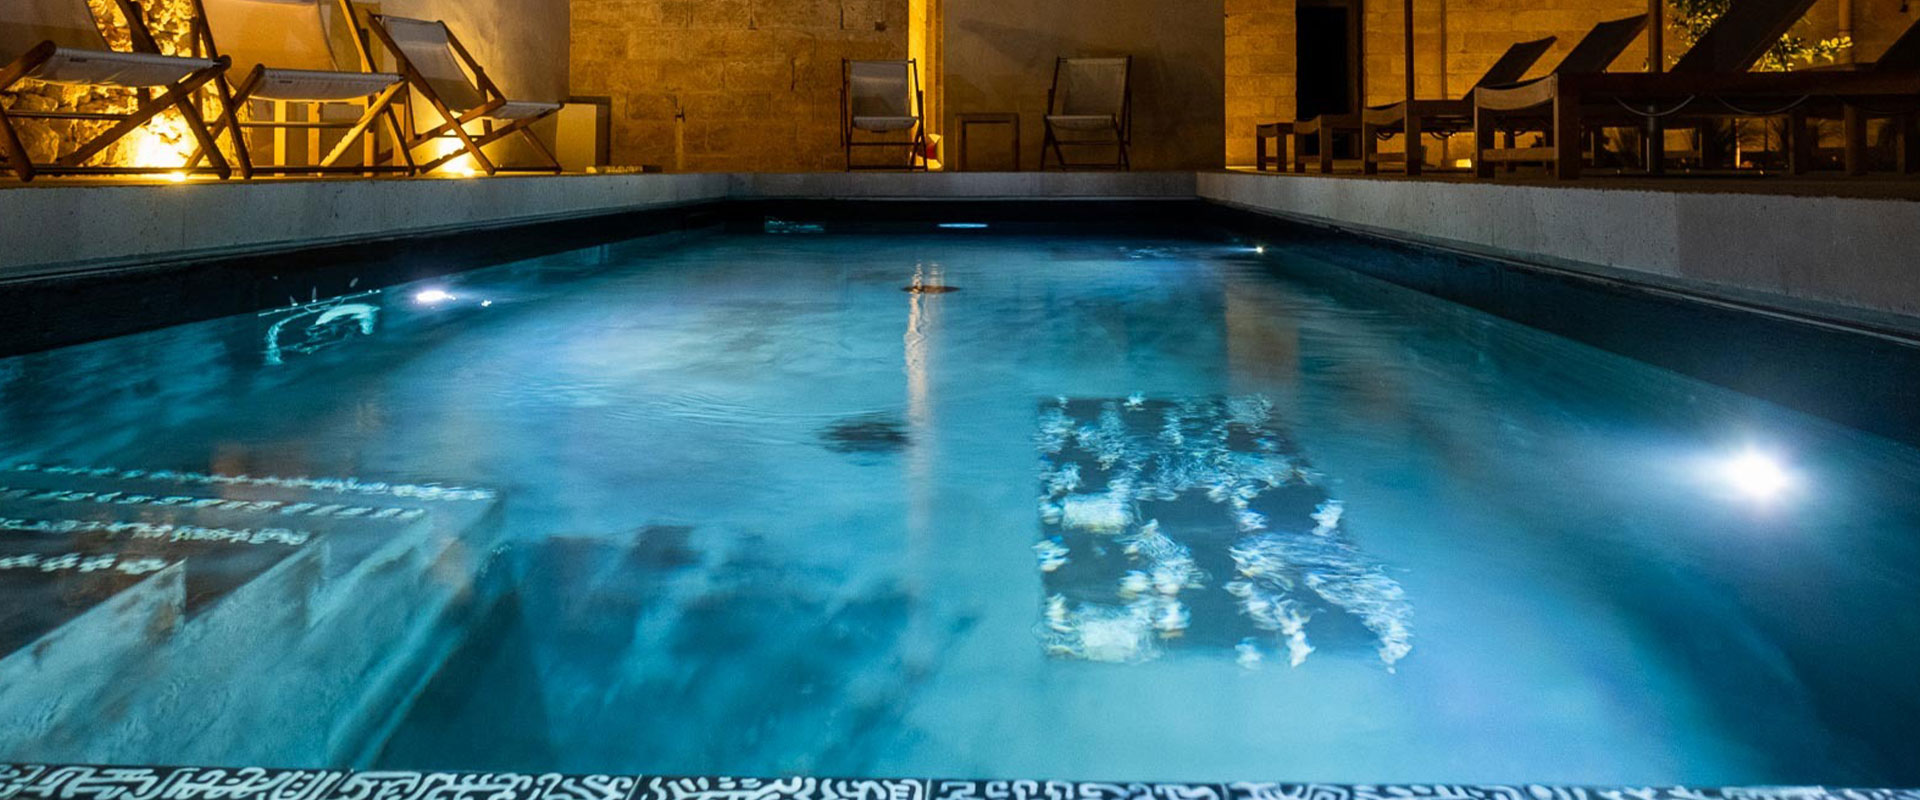 swimming pool salento holidays masseria spongano rooms hotel b&b hospitality dimora trebacili